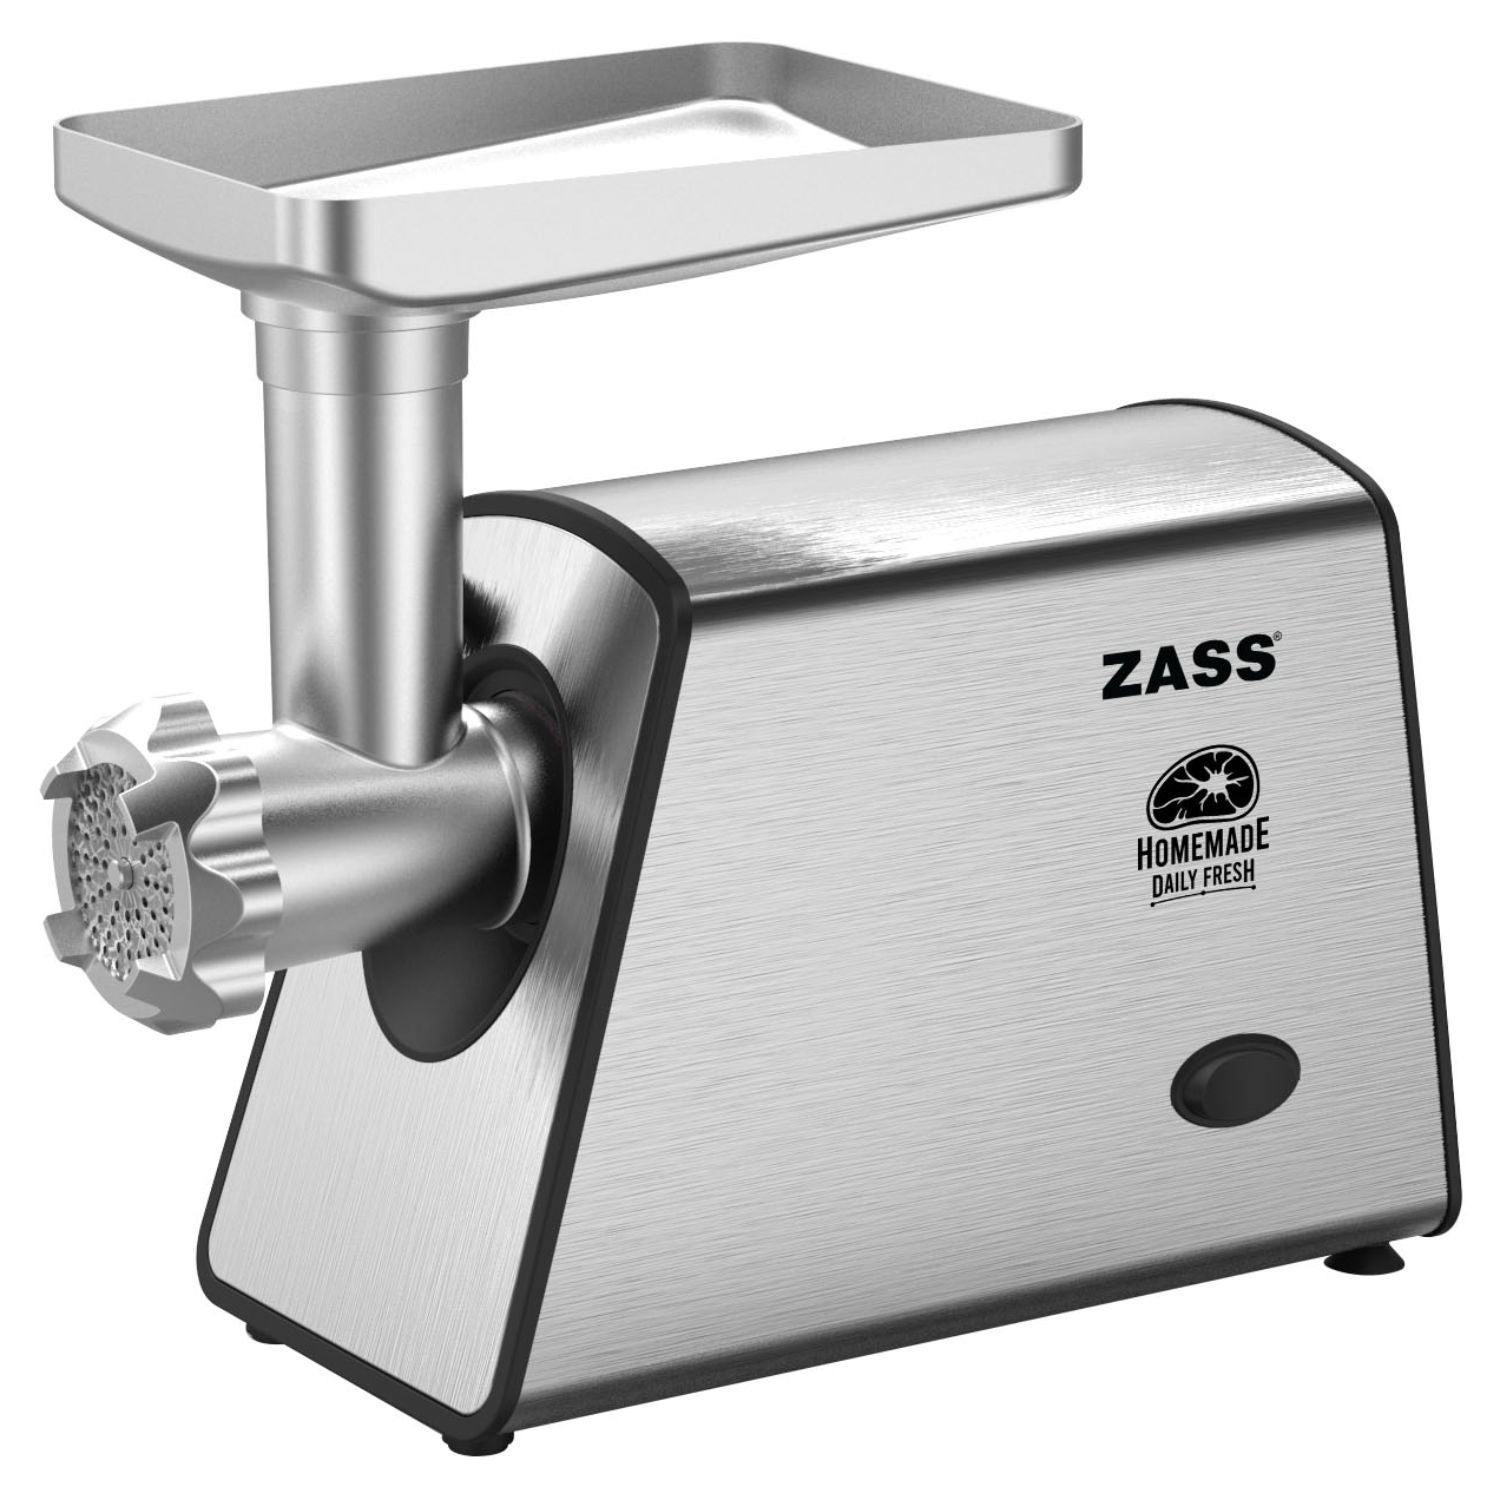 Masina de tocat carne, electrica, Zass ZMG 14, functie Reverse, 1.6 kg/min, 1600 W, accesoriu carnati si kebbe, accesoriu pentru suc de rosii, argintie